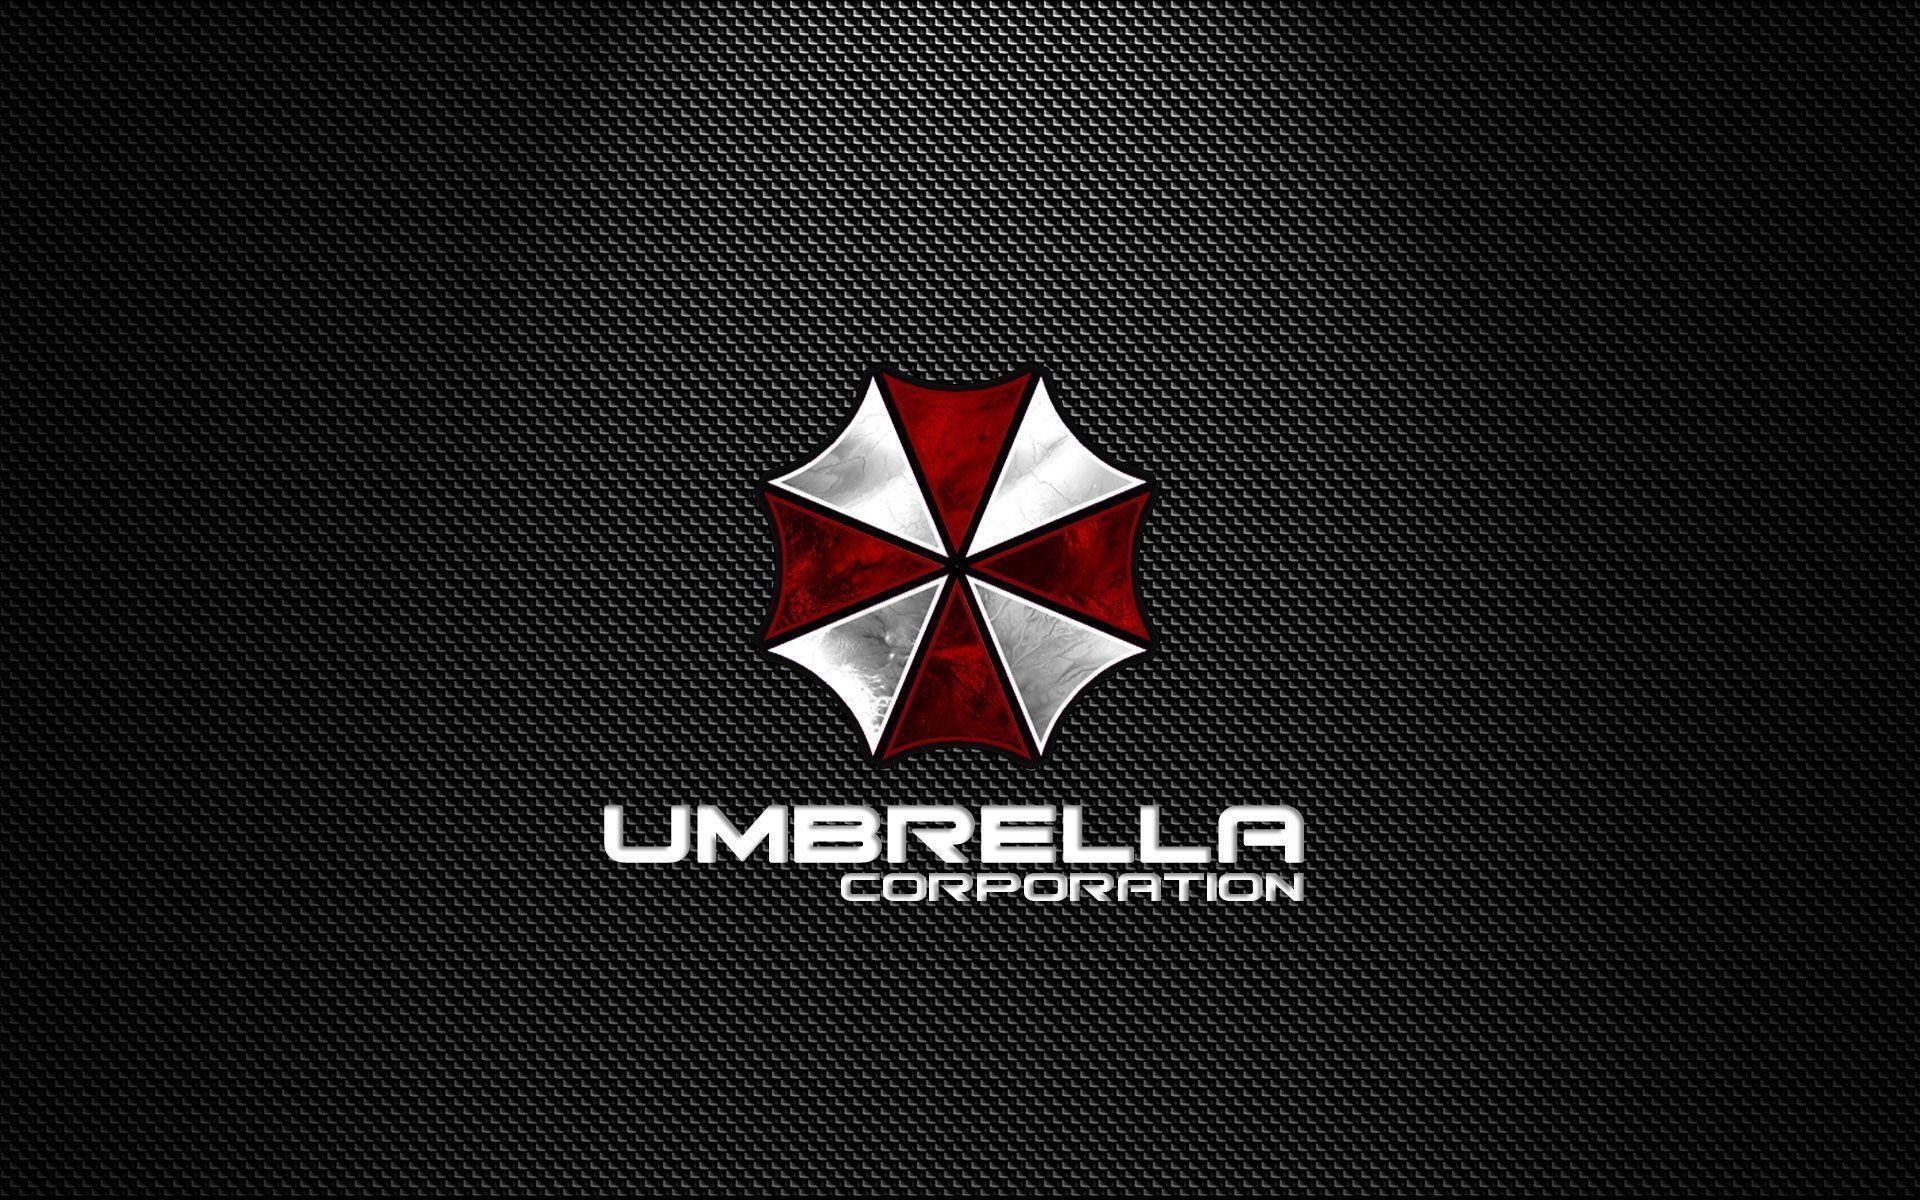 1920x1200 Umbrella Corporation Wallpapers - Full HD wallpaper search